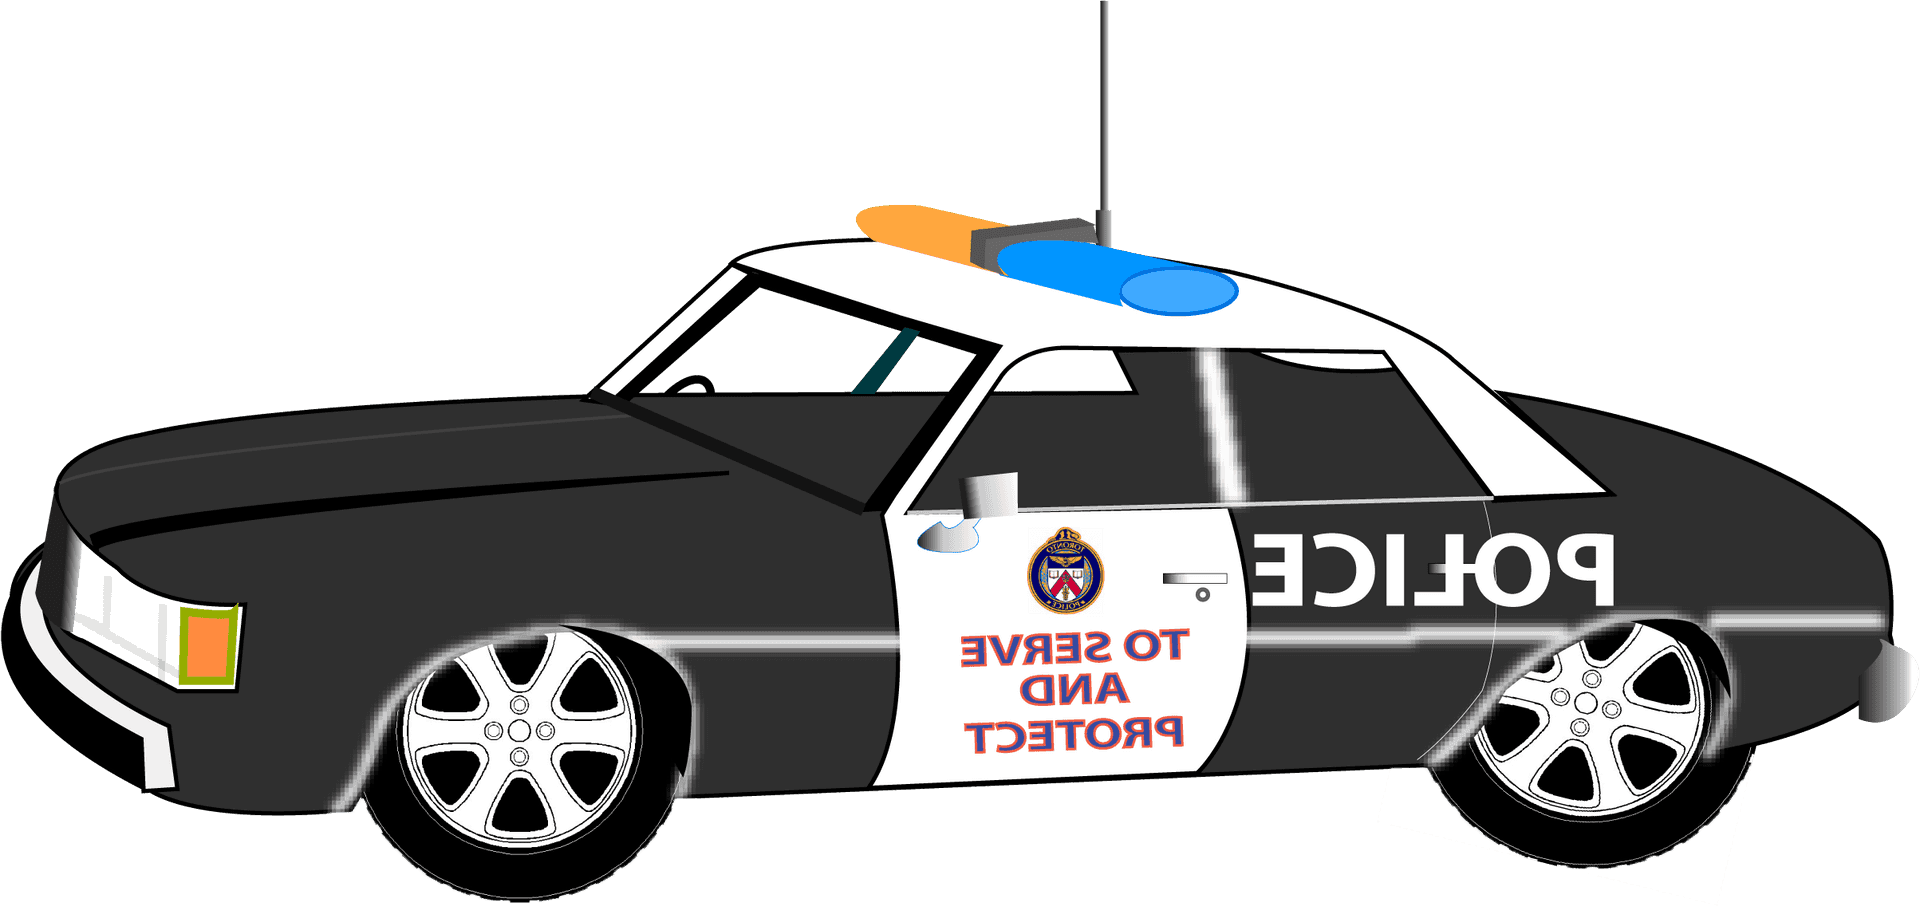 Blackand White Police Car Illustration.png PNG image